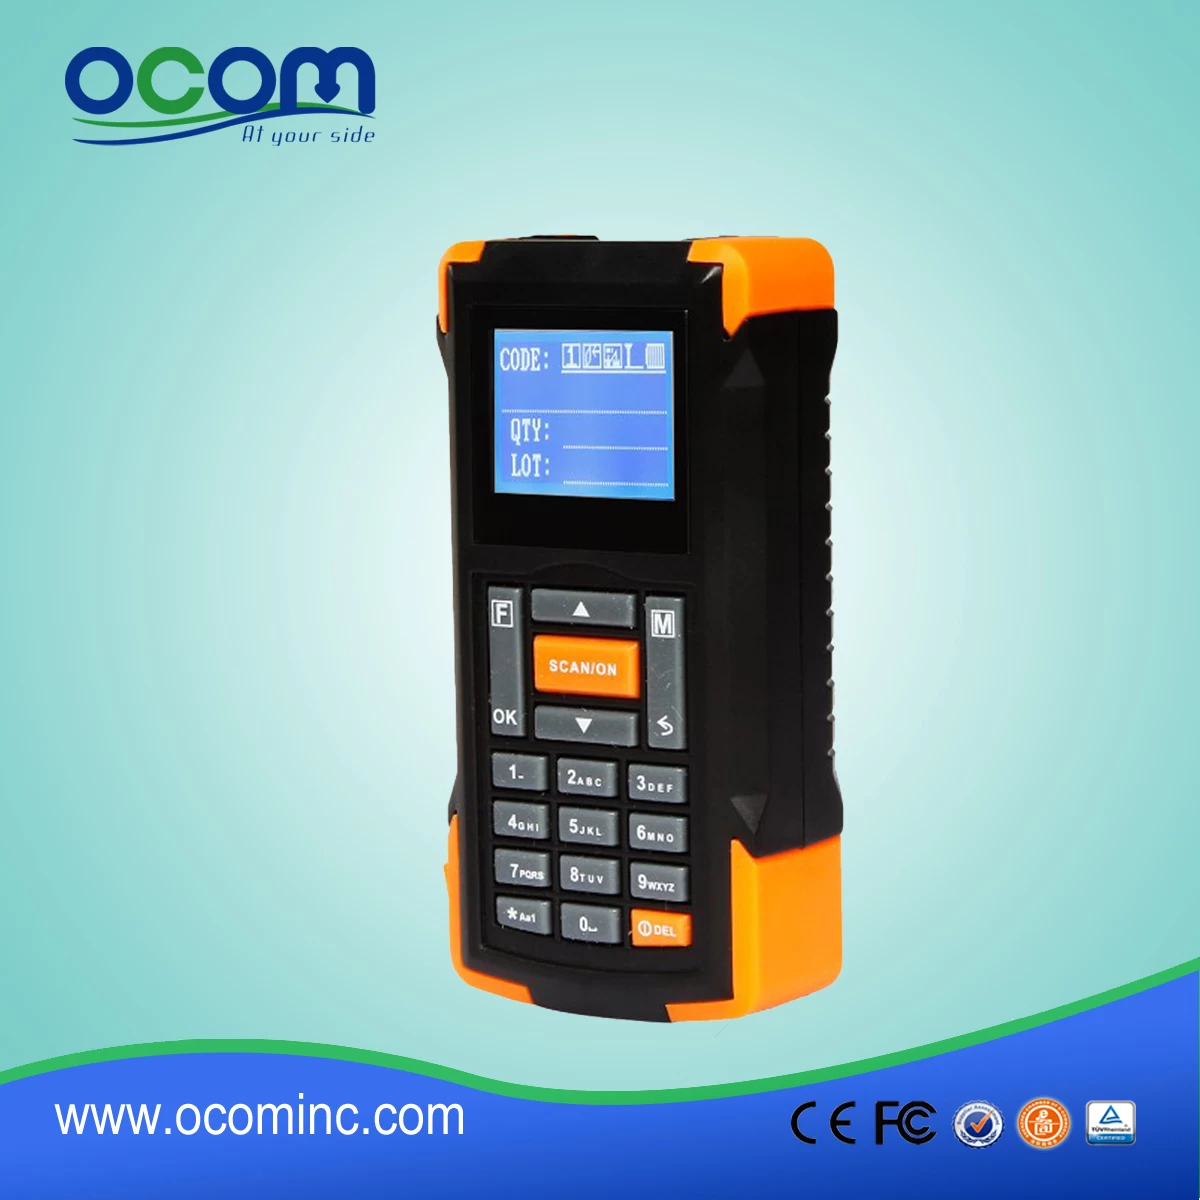 mini wireless barcode scanner OCBS-D005